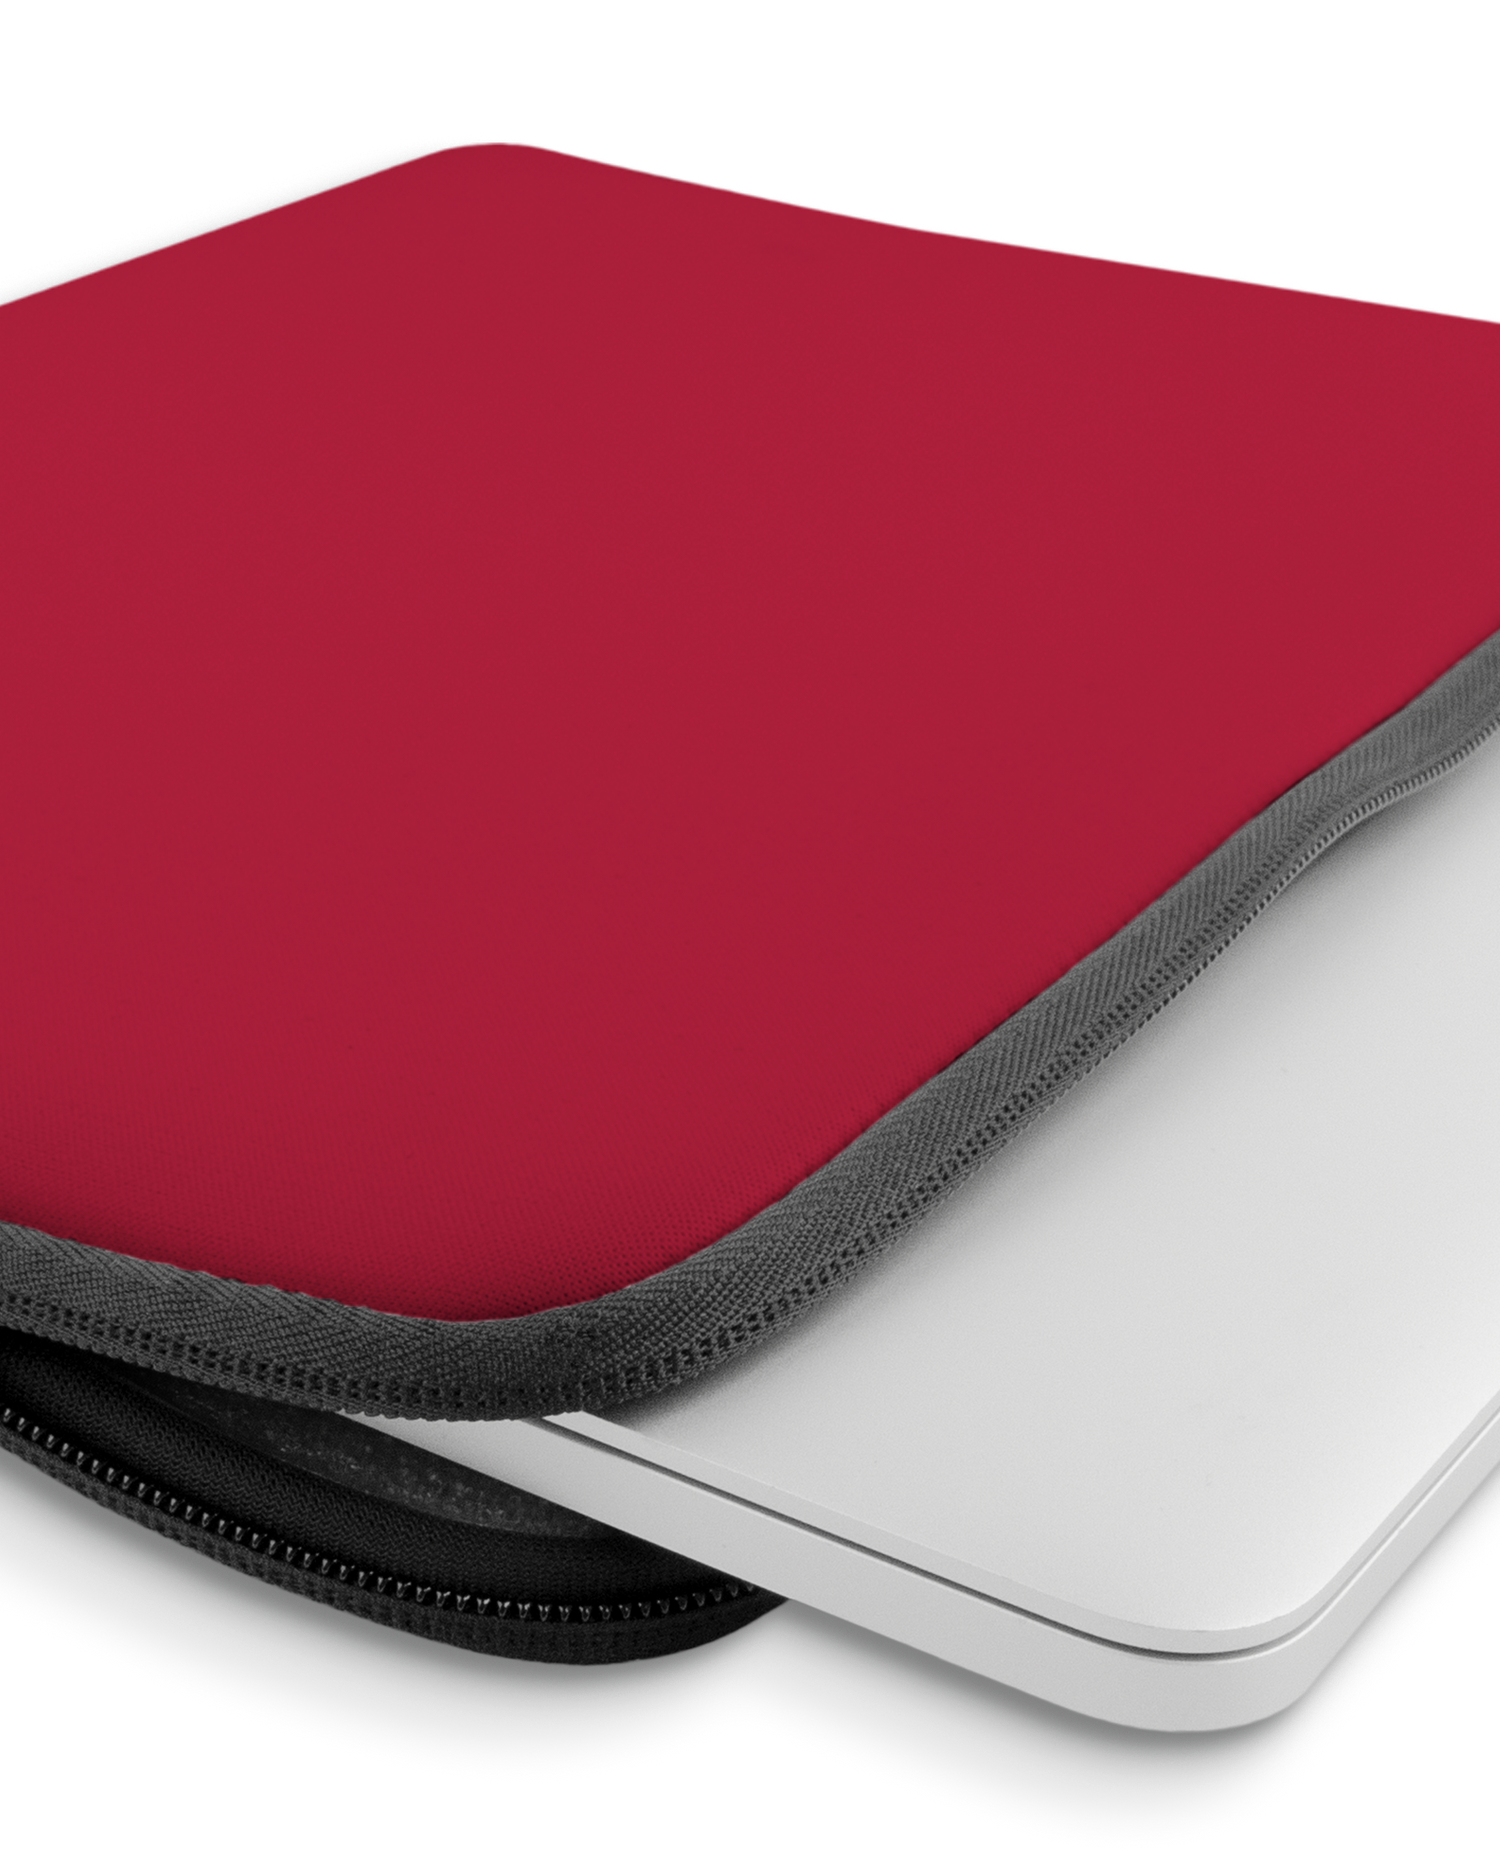 RED Laptophülle 14 Zoll mit Gerät im Inneren